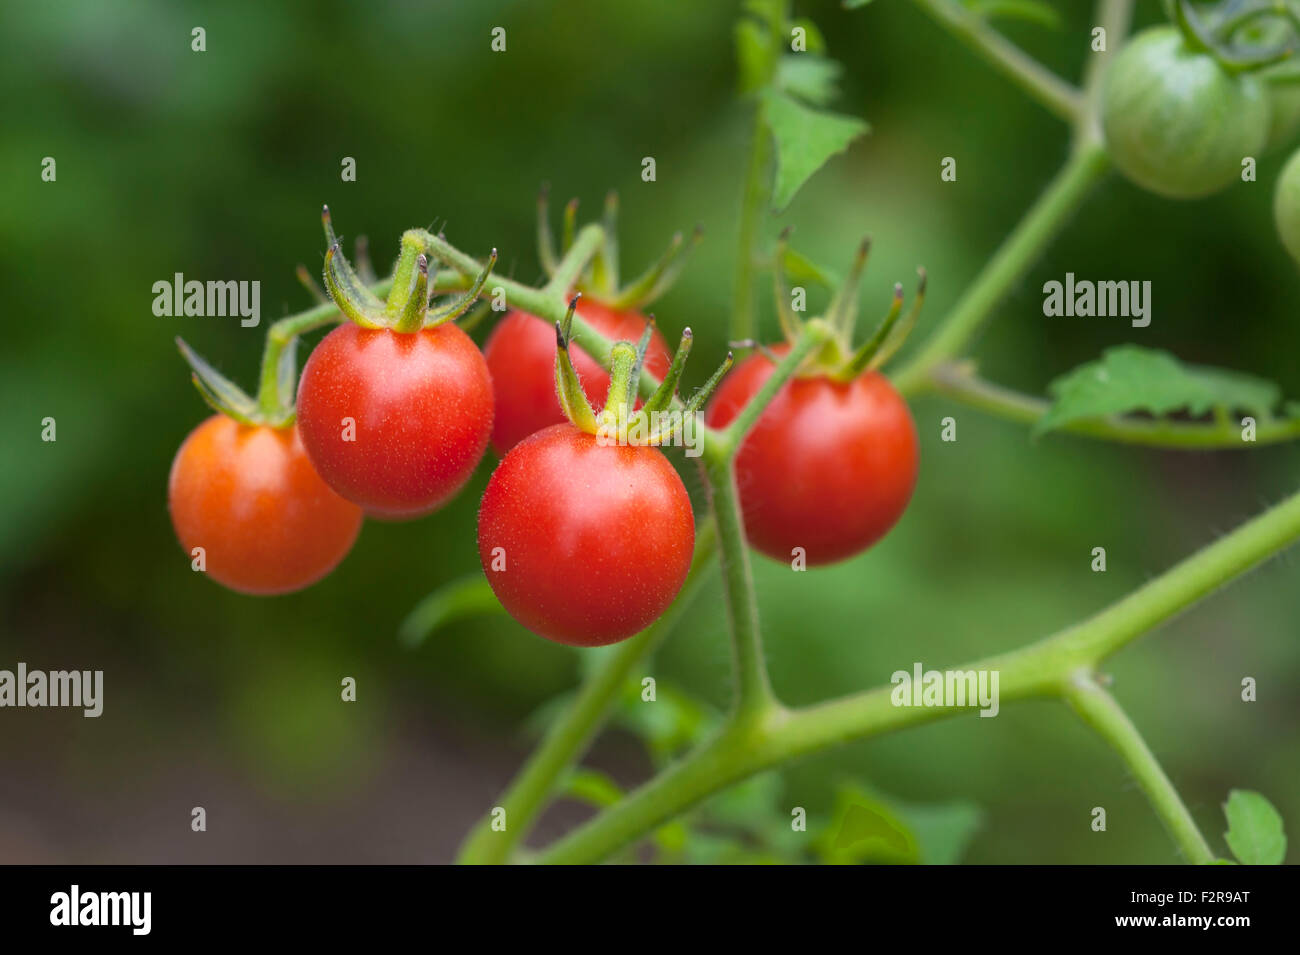 Ripe cherry tomatoes (Lycopersicon esculentum var. Cerasiforme) on the tomato plant, Germany Stock Photo